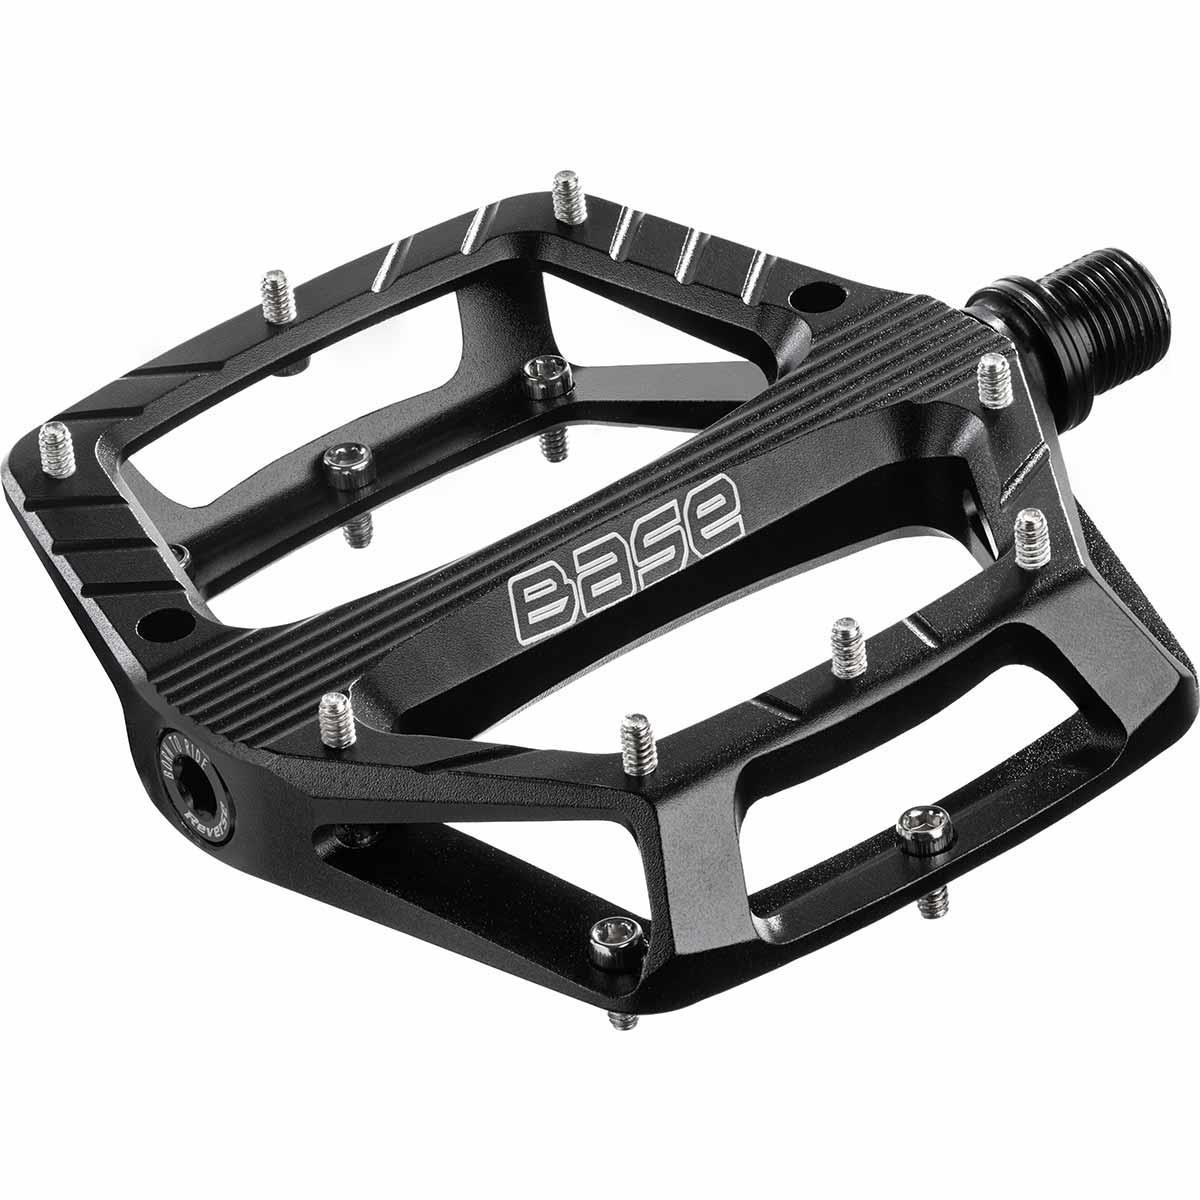 Reverse Components Pedals Base Black